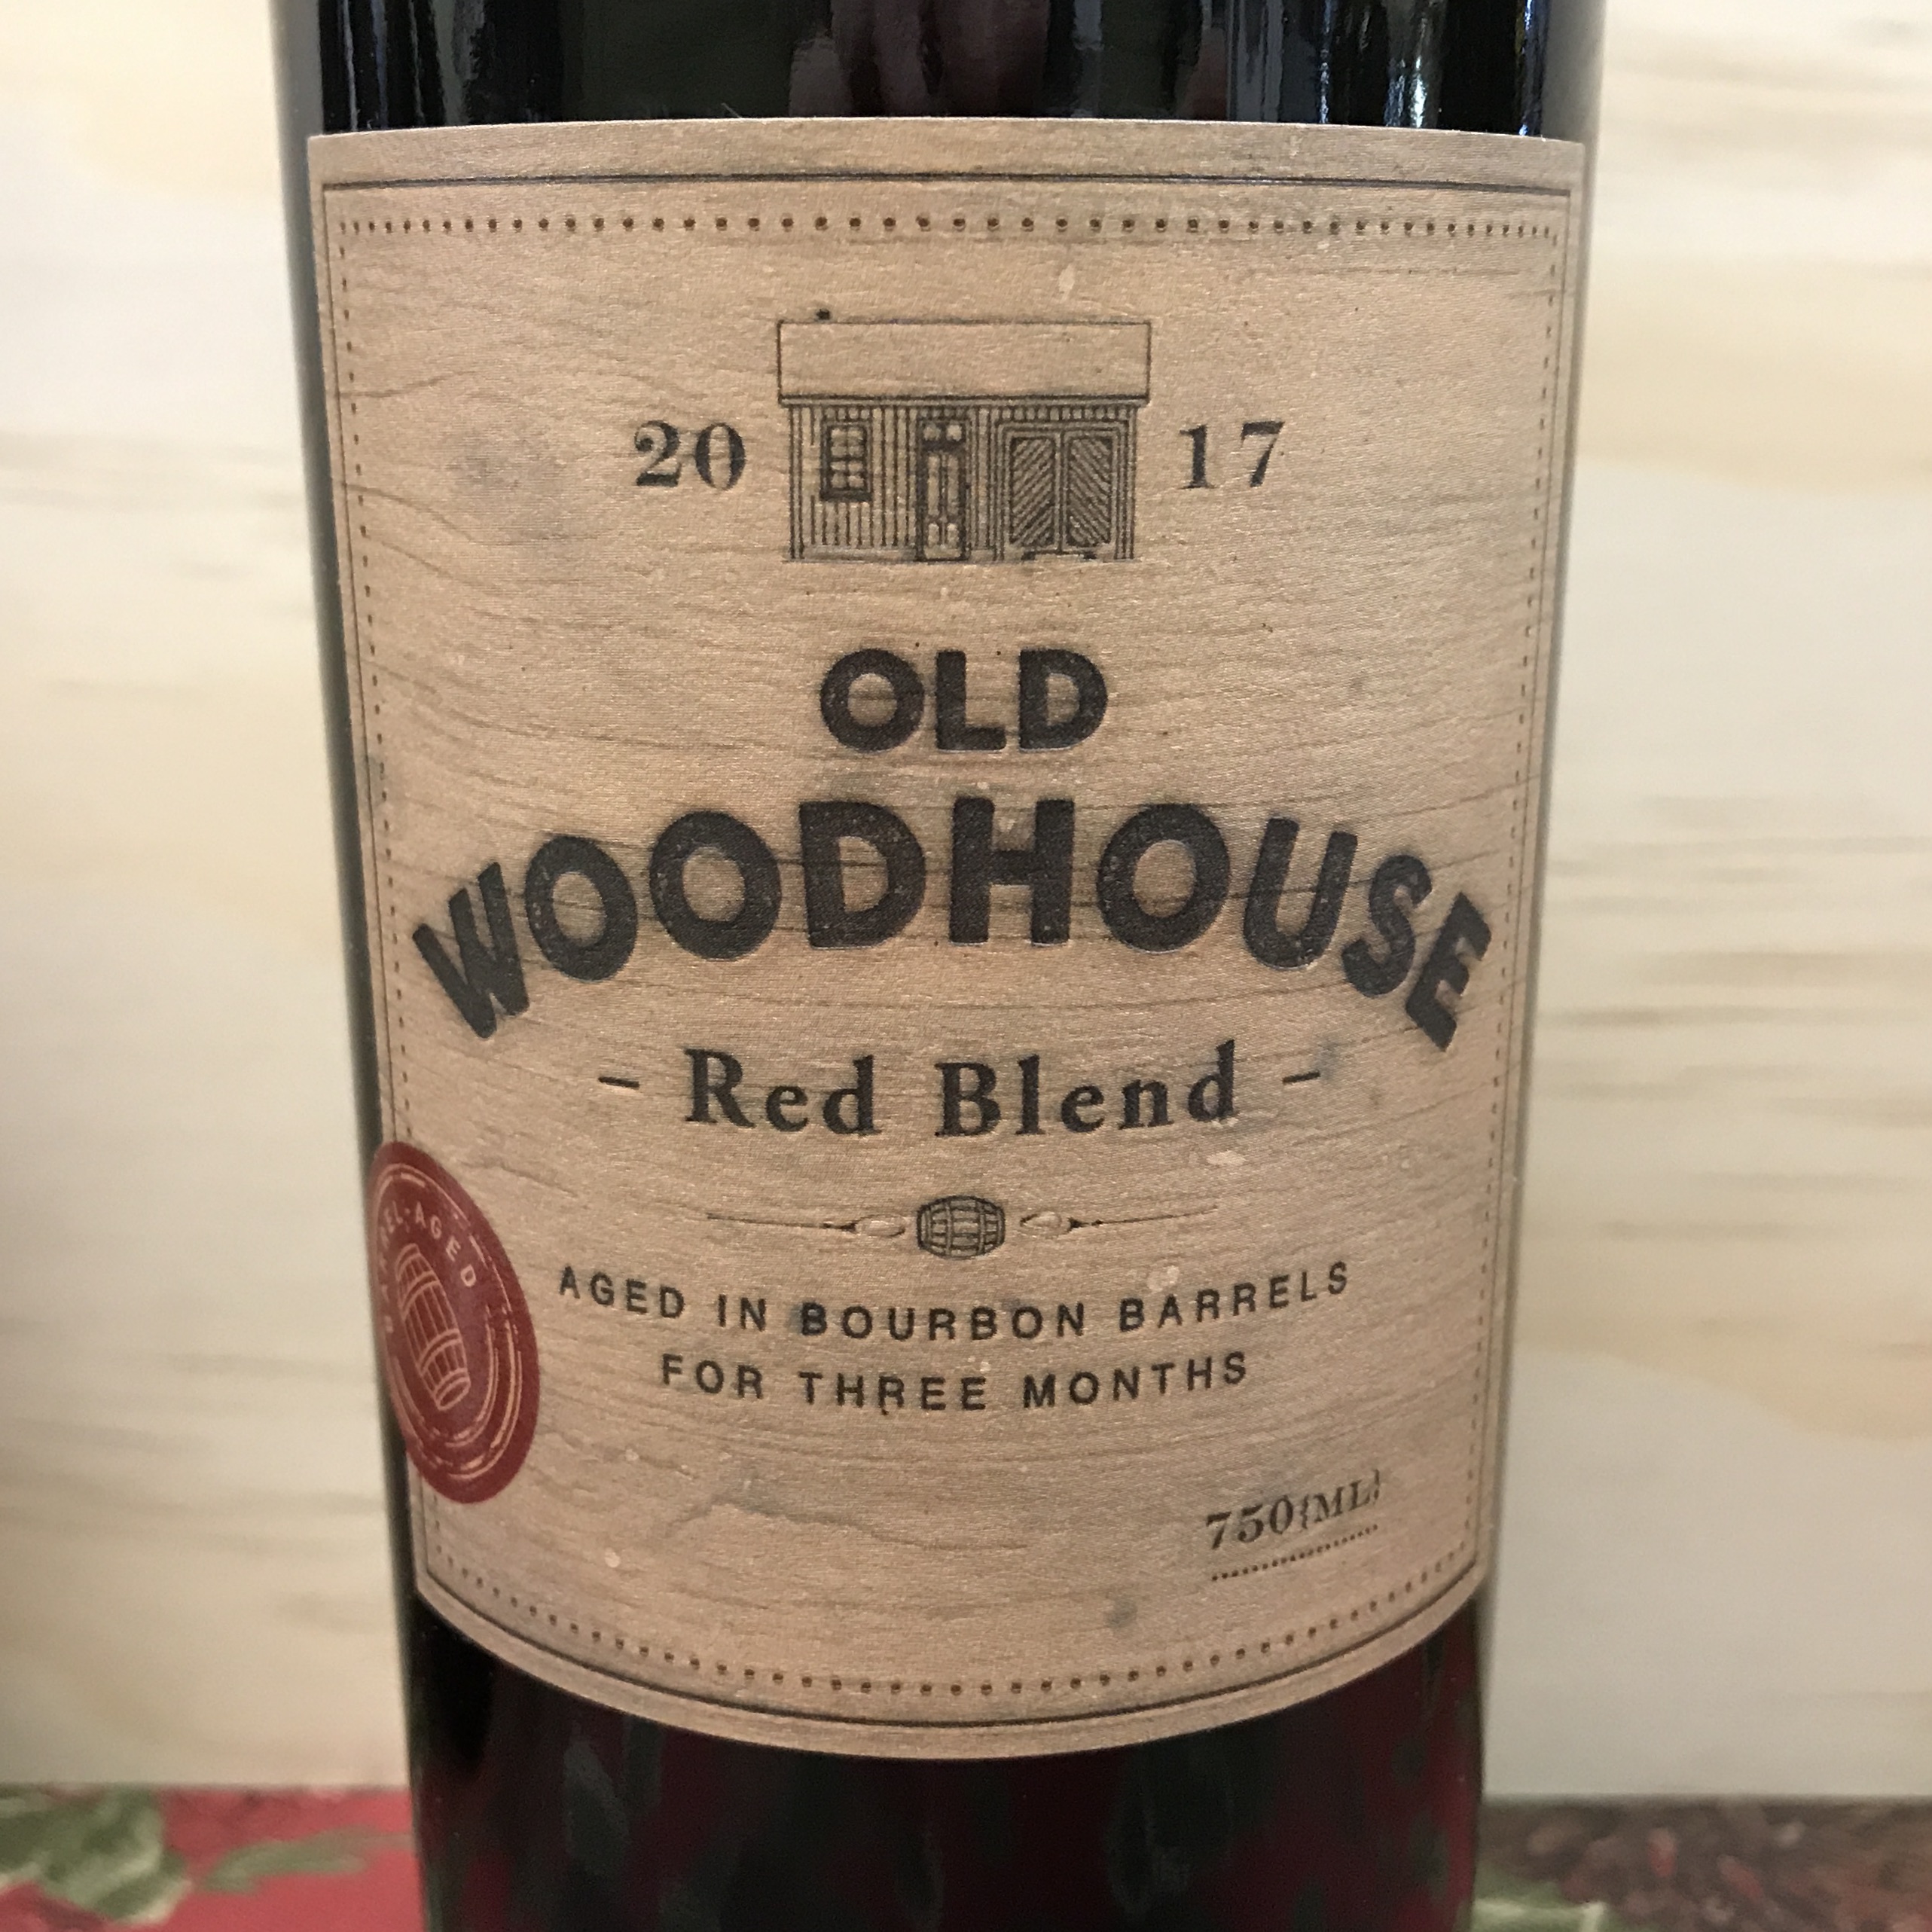 Old Woodhouse Red Blend Bourbon Barrel Aged 2020